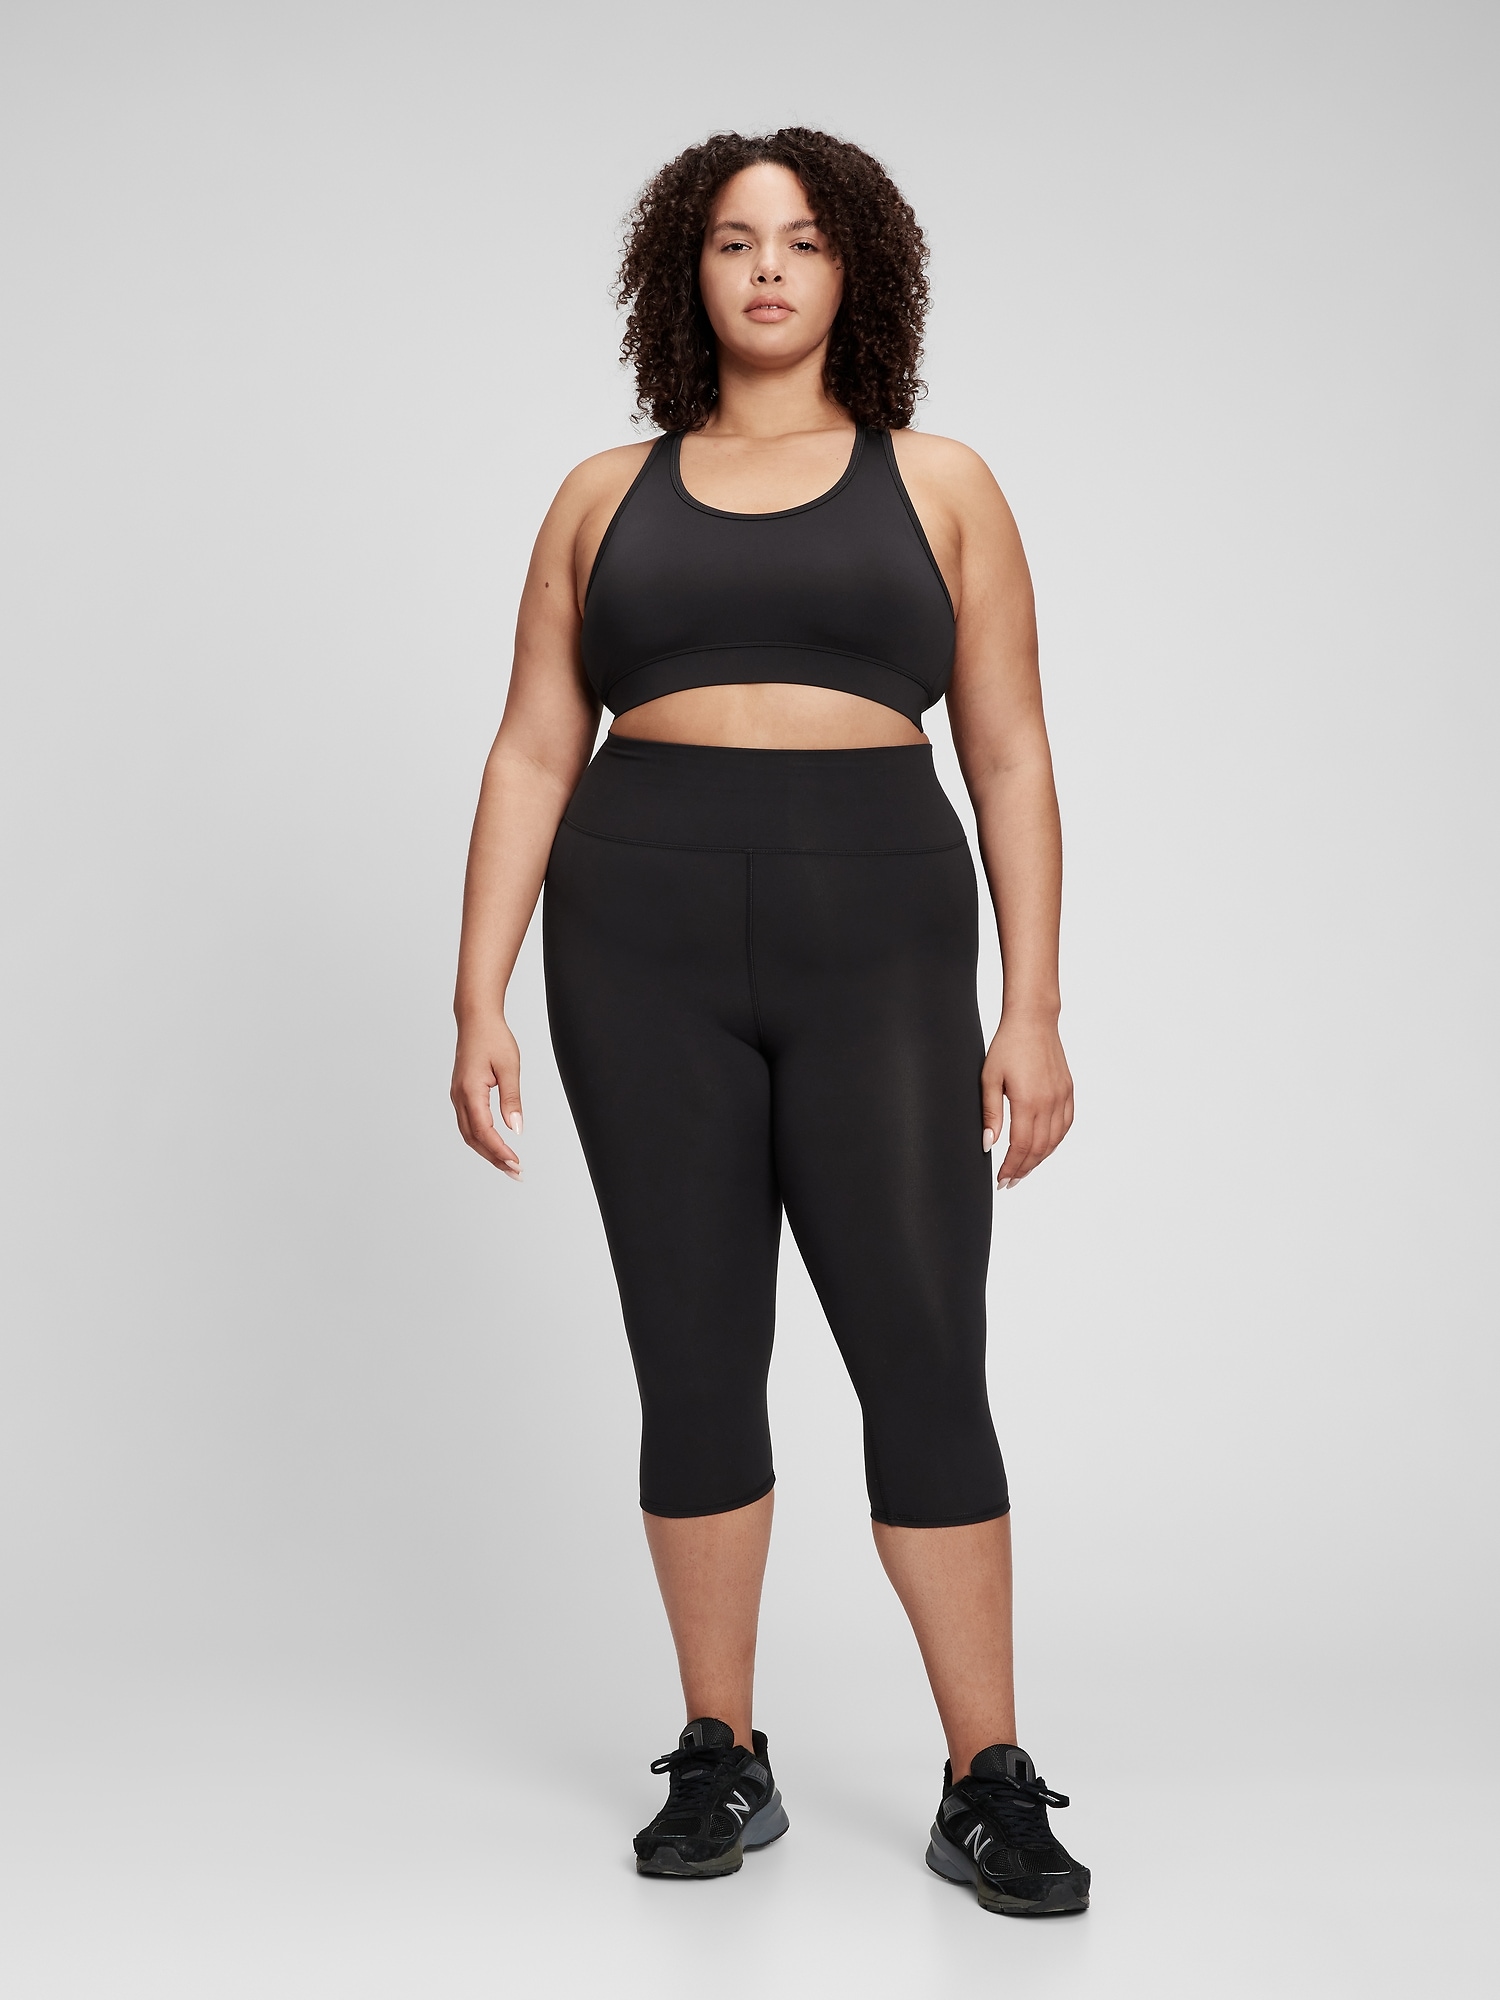 Gap fit Women Eclipse Medium Impact T-Back Longline Sports Bra Black NWT  Size XS